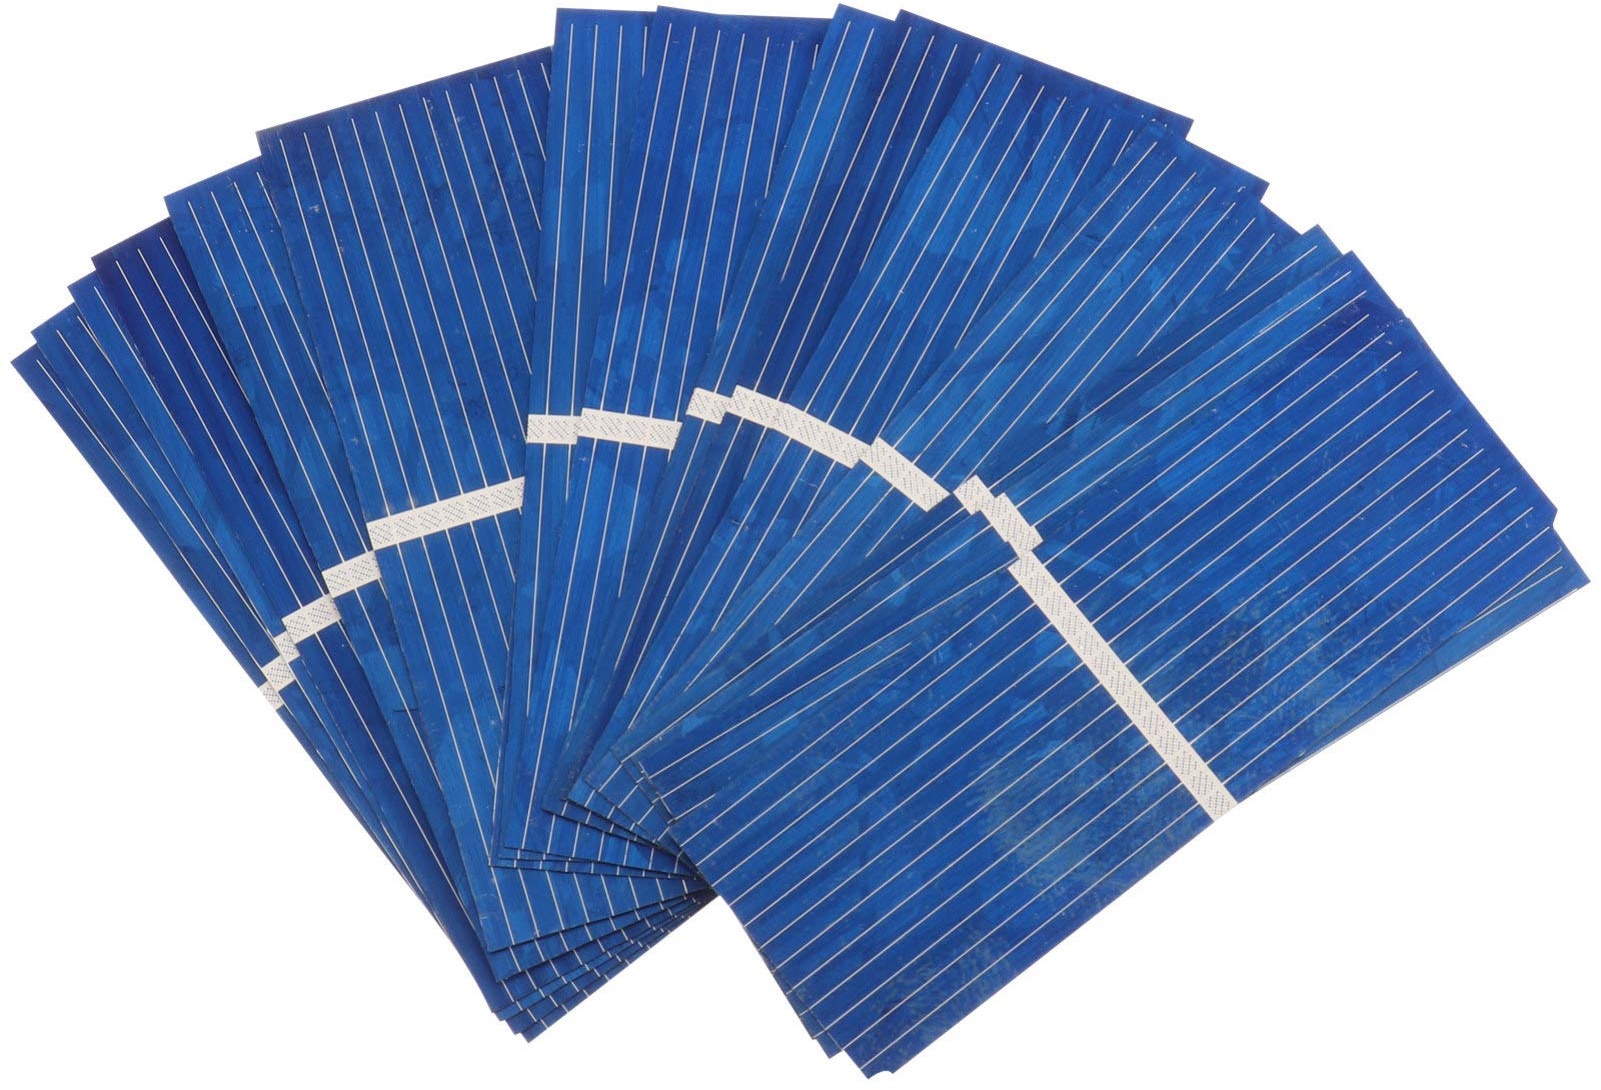 YARNOW 100Pcs Mini Solarzellen DIY Solar Panels Polykristalline Batterie Ladegerät Micro Mini Power Solar Zellen für Solar Panels DIY Projekte (Blau)